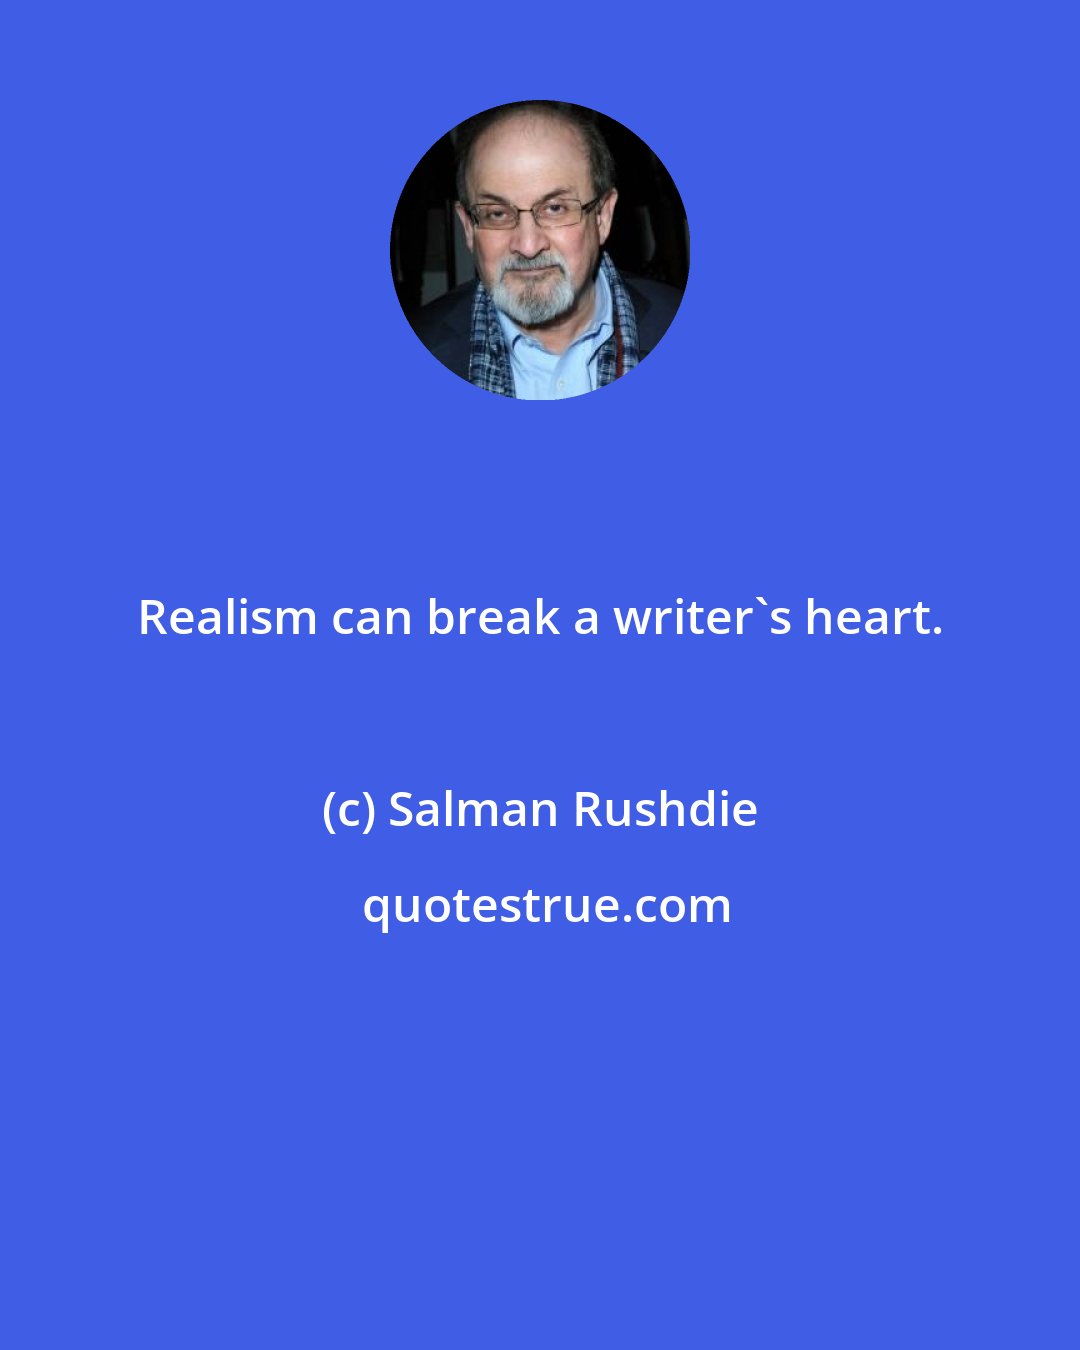 Salman Rushdie: Realism can break a writer's heart.